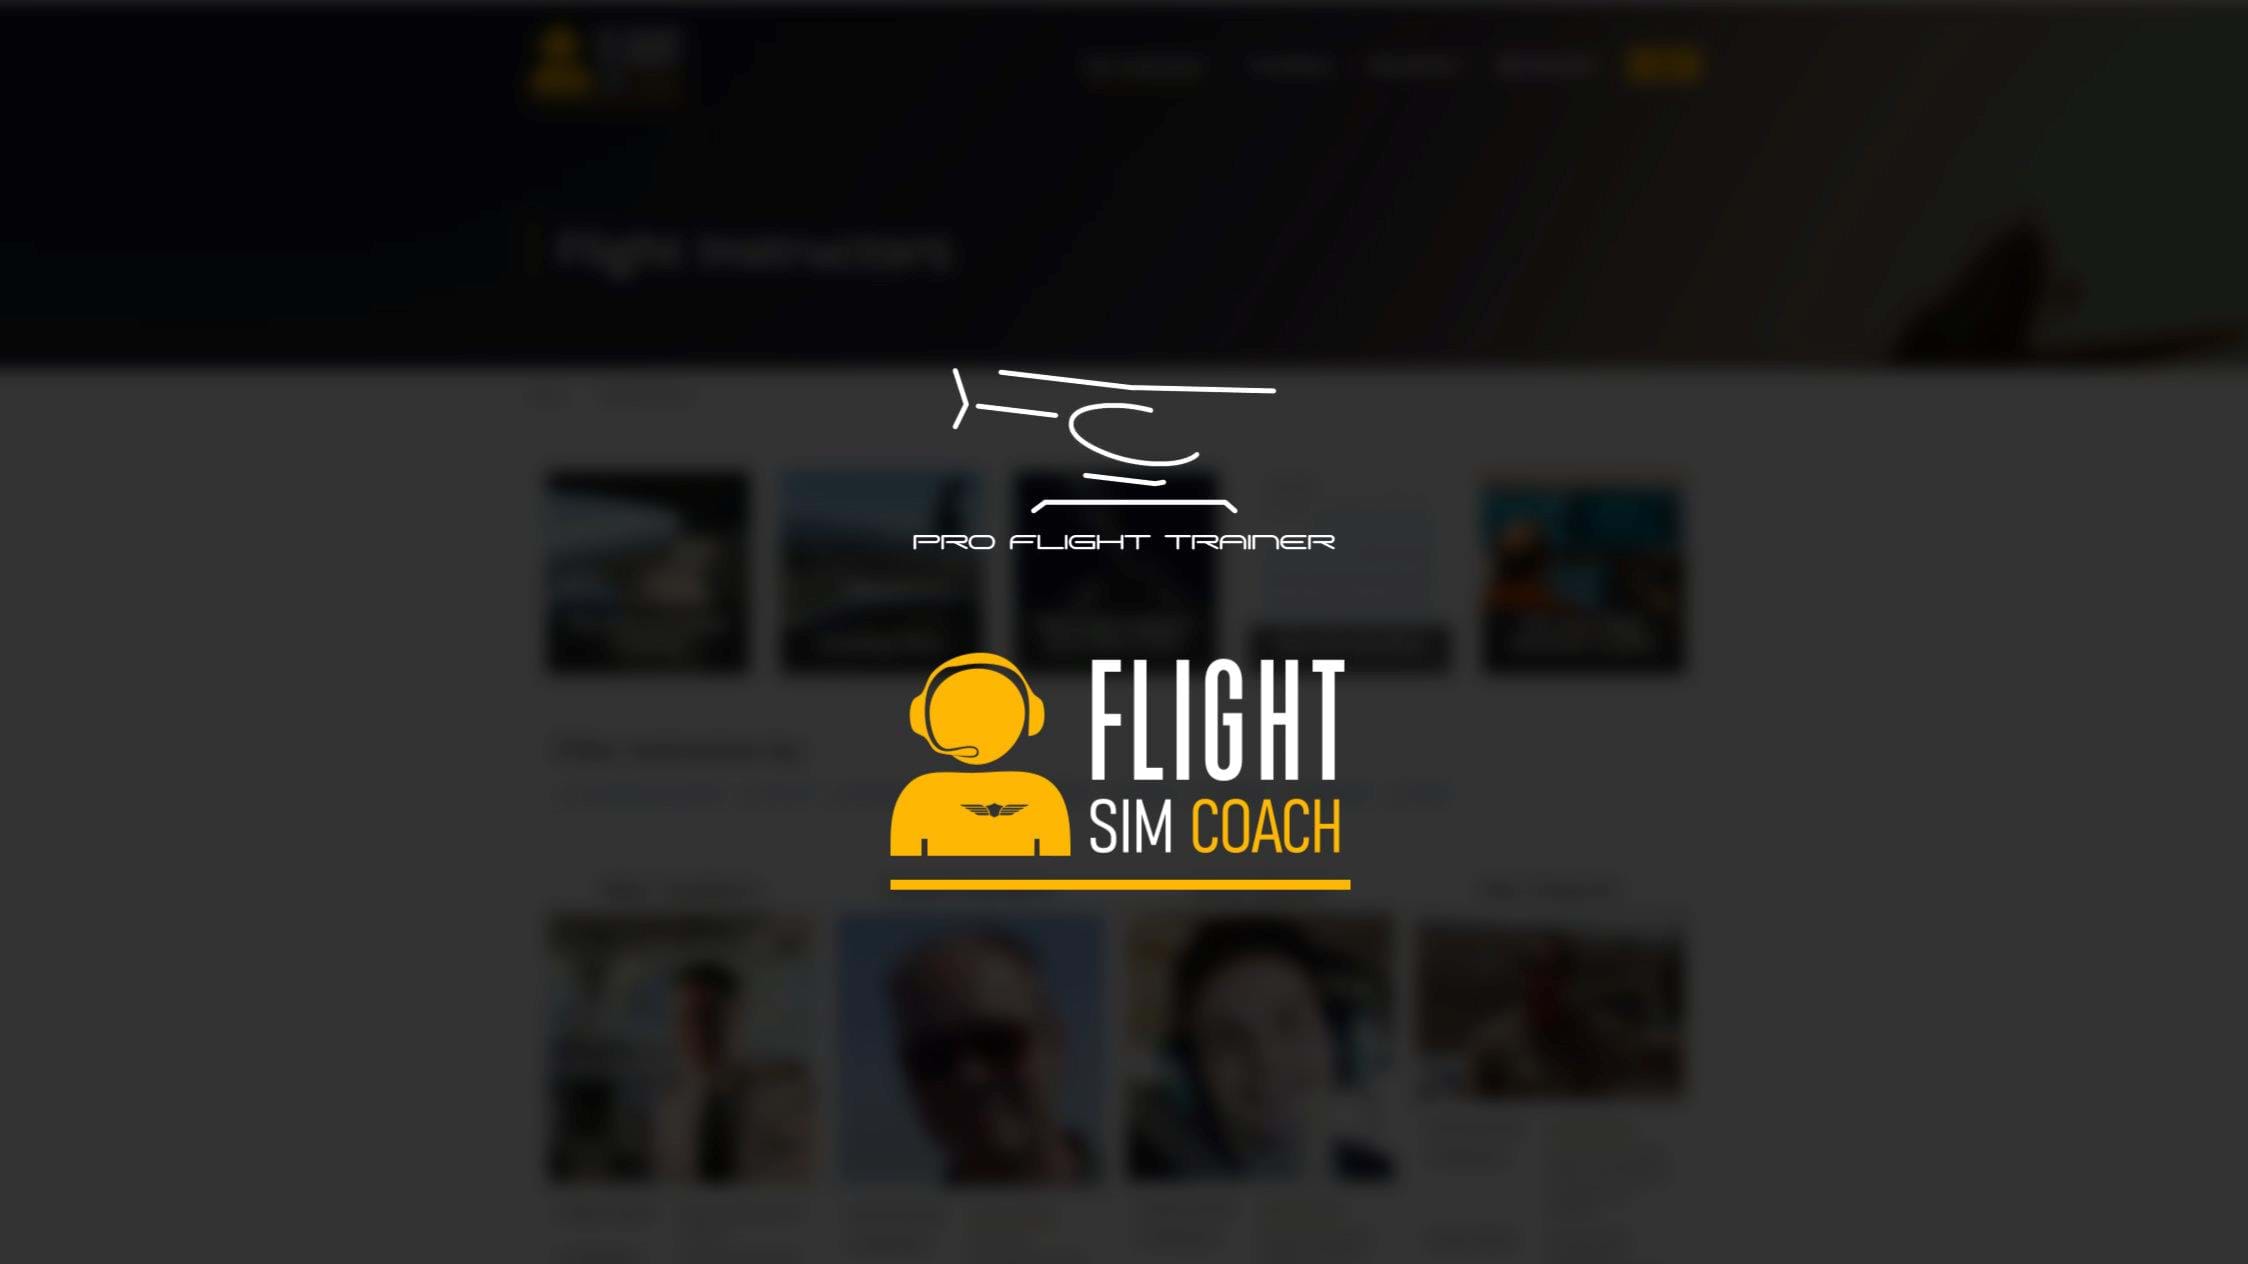 Pro Flight Trainer / Flight Sim Coach